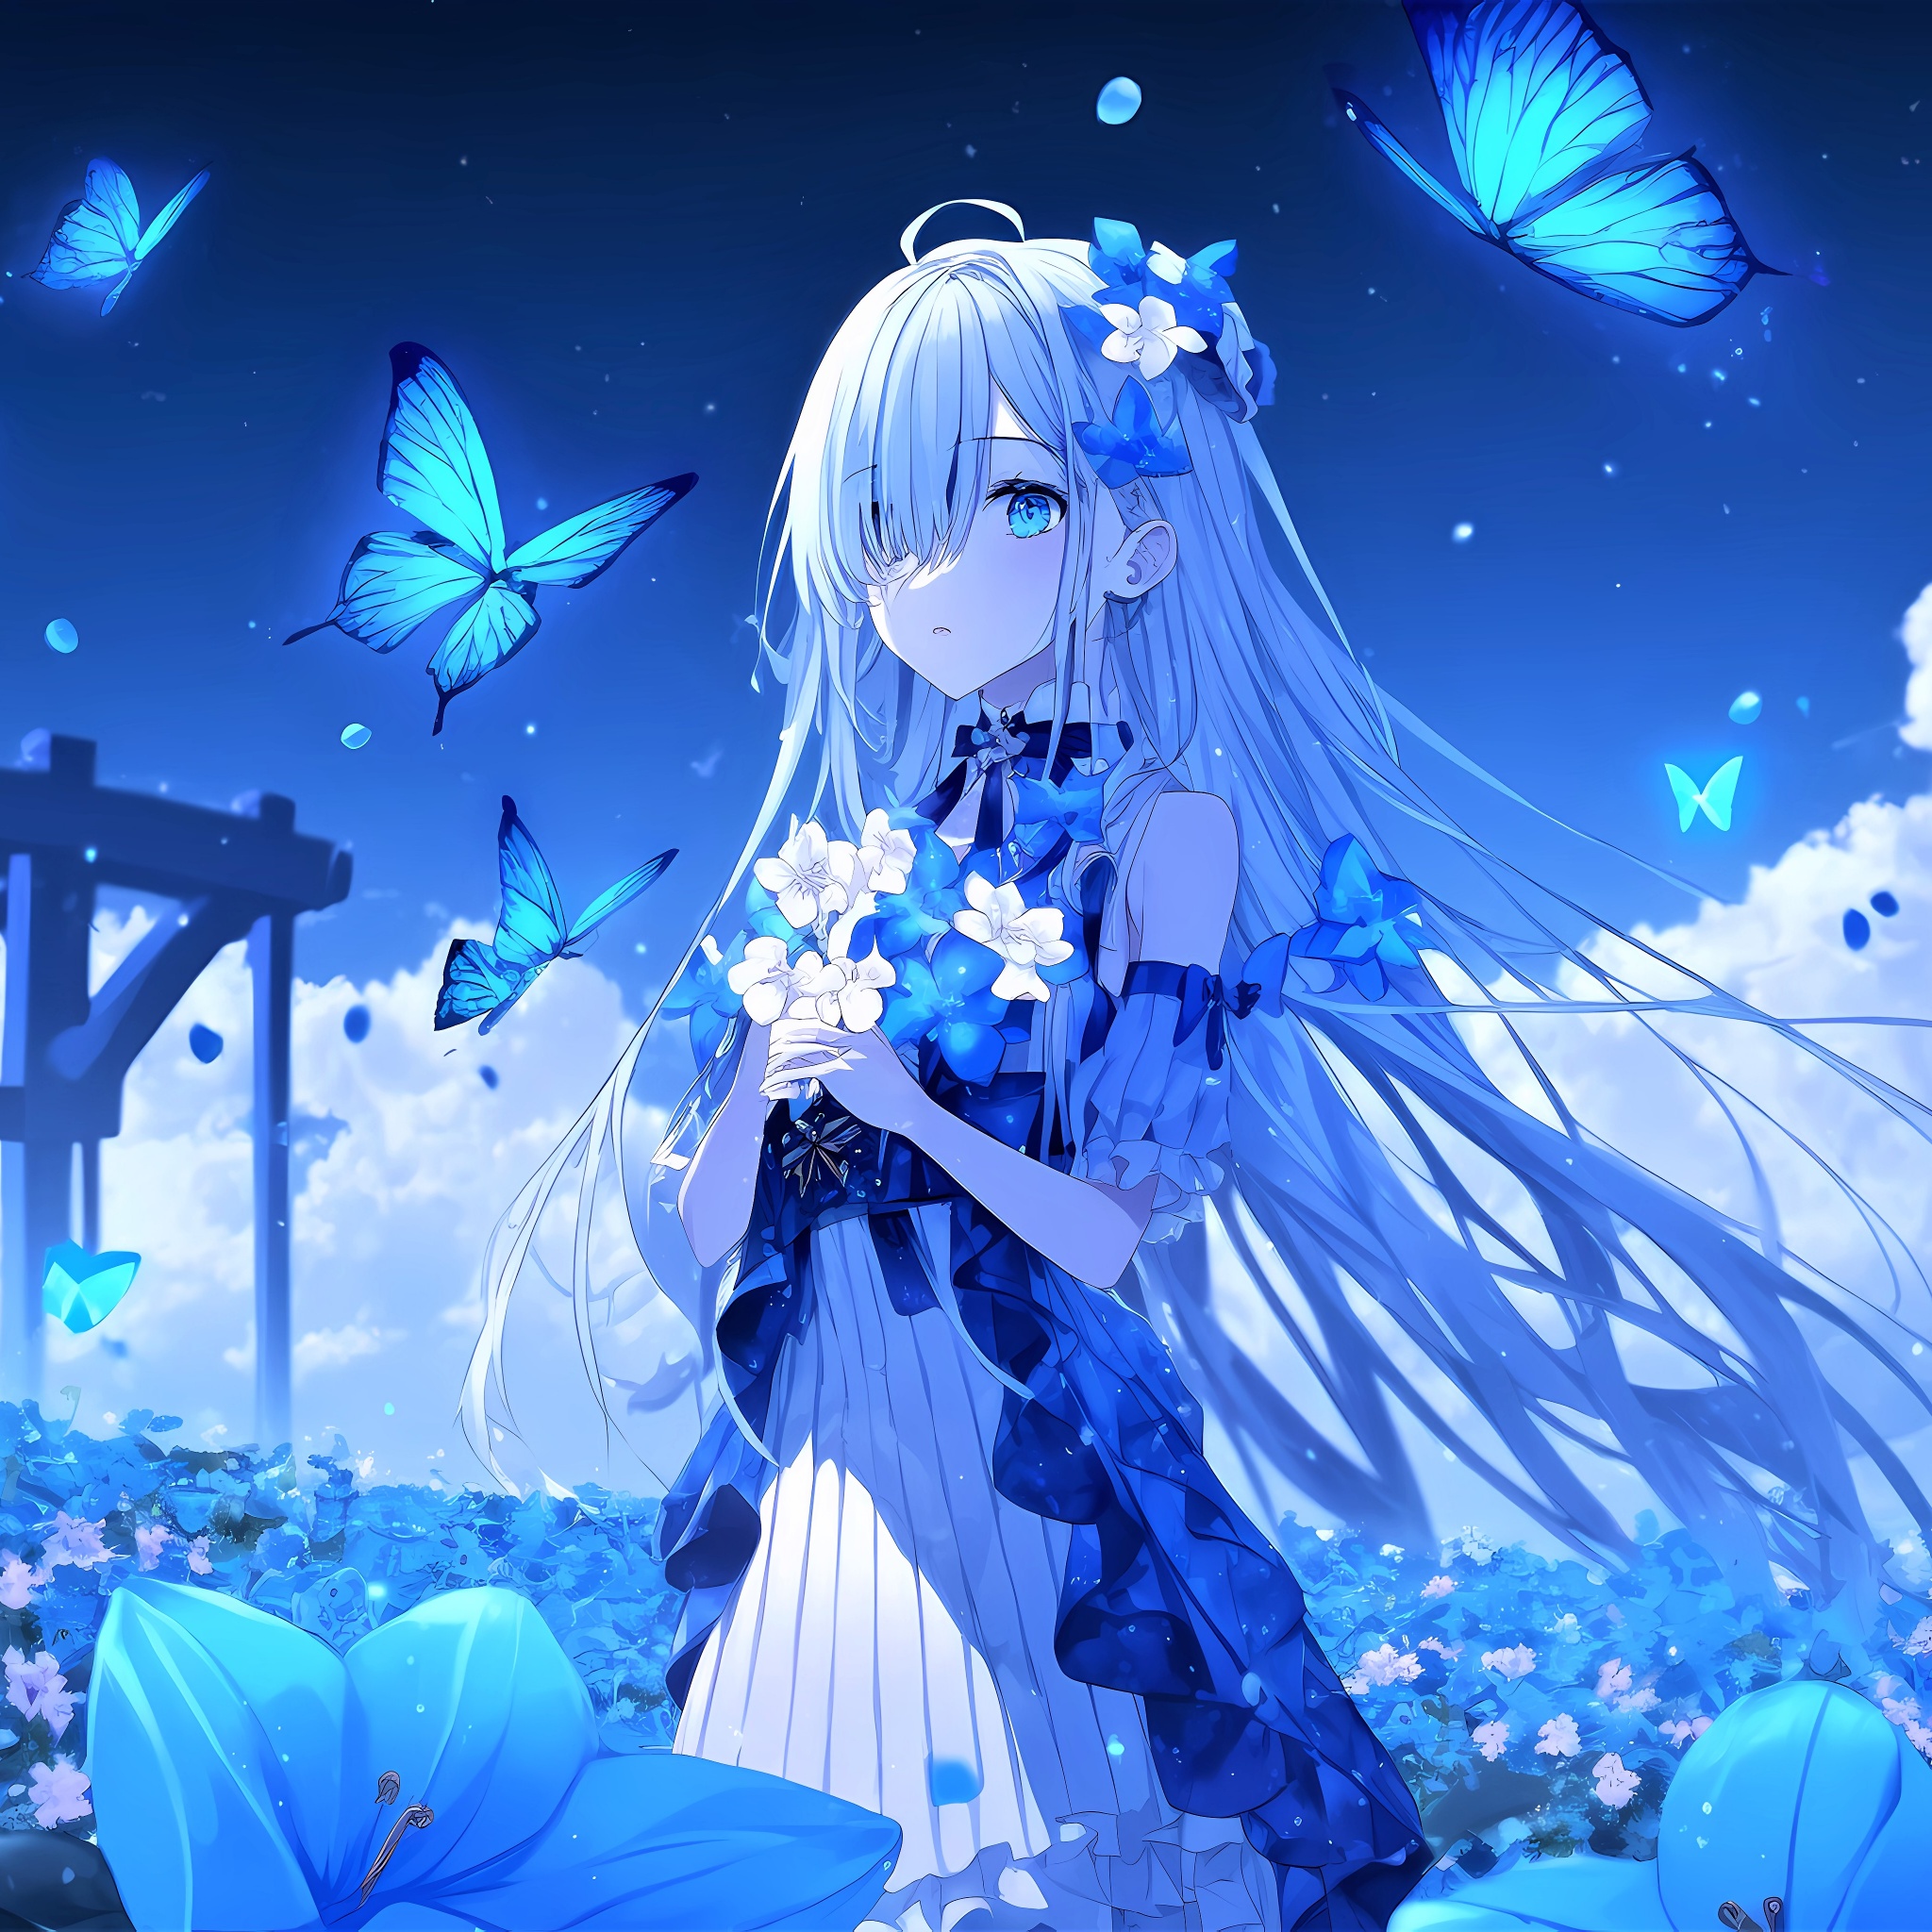 Fairy butterfly anime magic girl by MikaMoha on DeviantArt